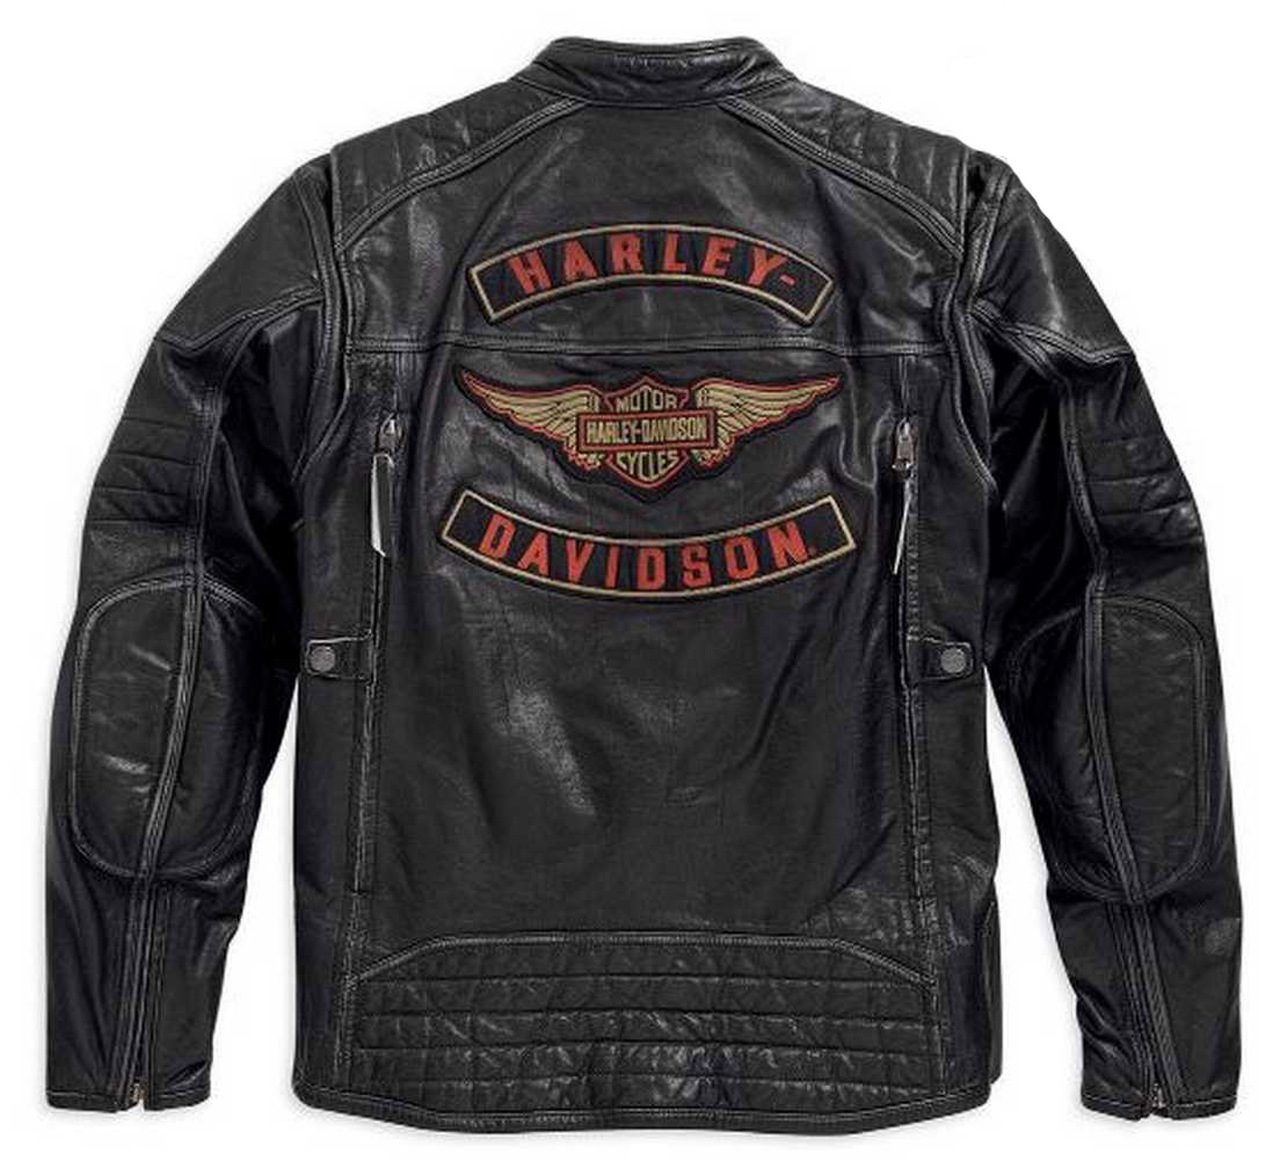 HARLEY DAVIDSON FXRG Leather PANTS | 27096 | Size: XL m 38